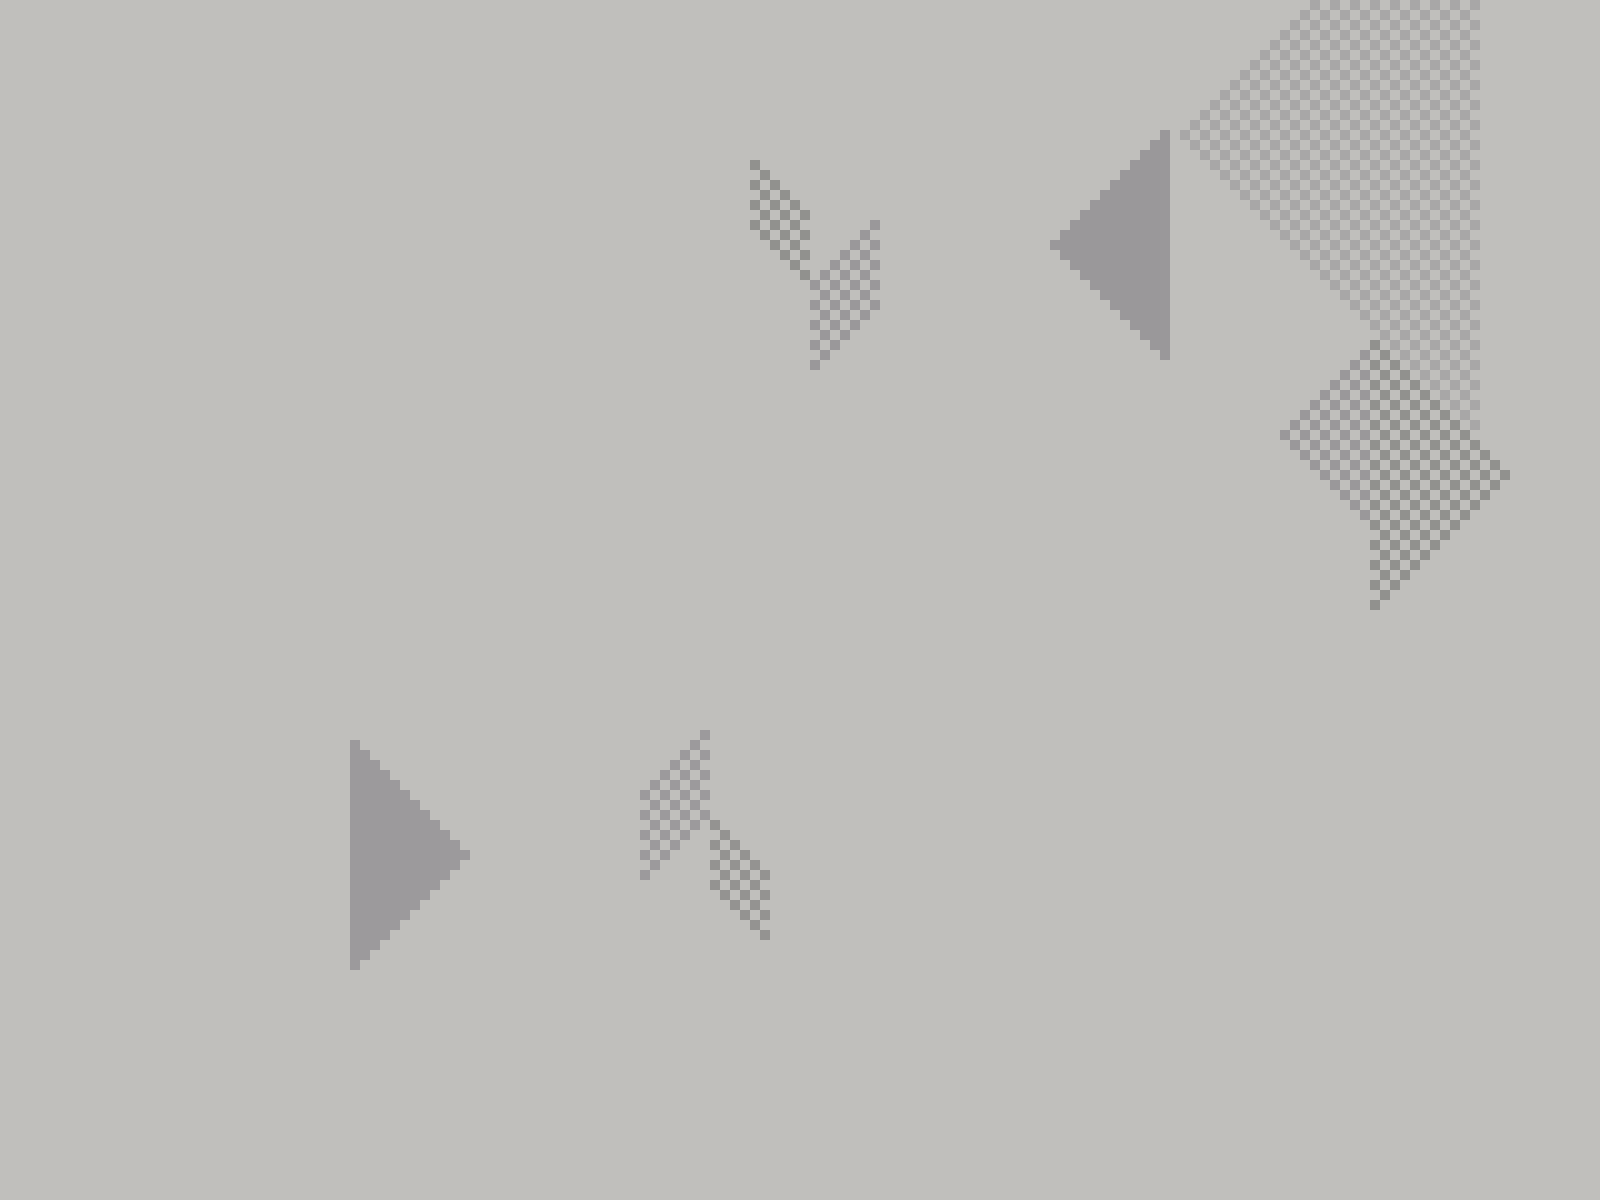 File Shredder gnome icon pixaki pixelart